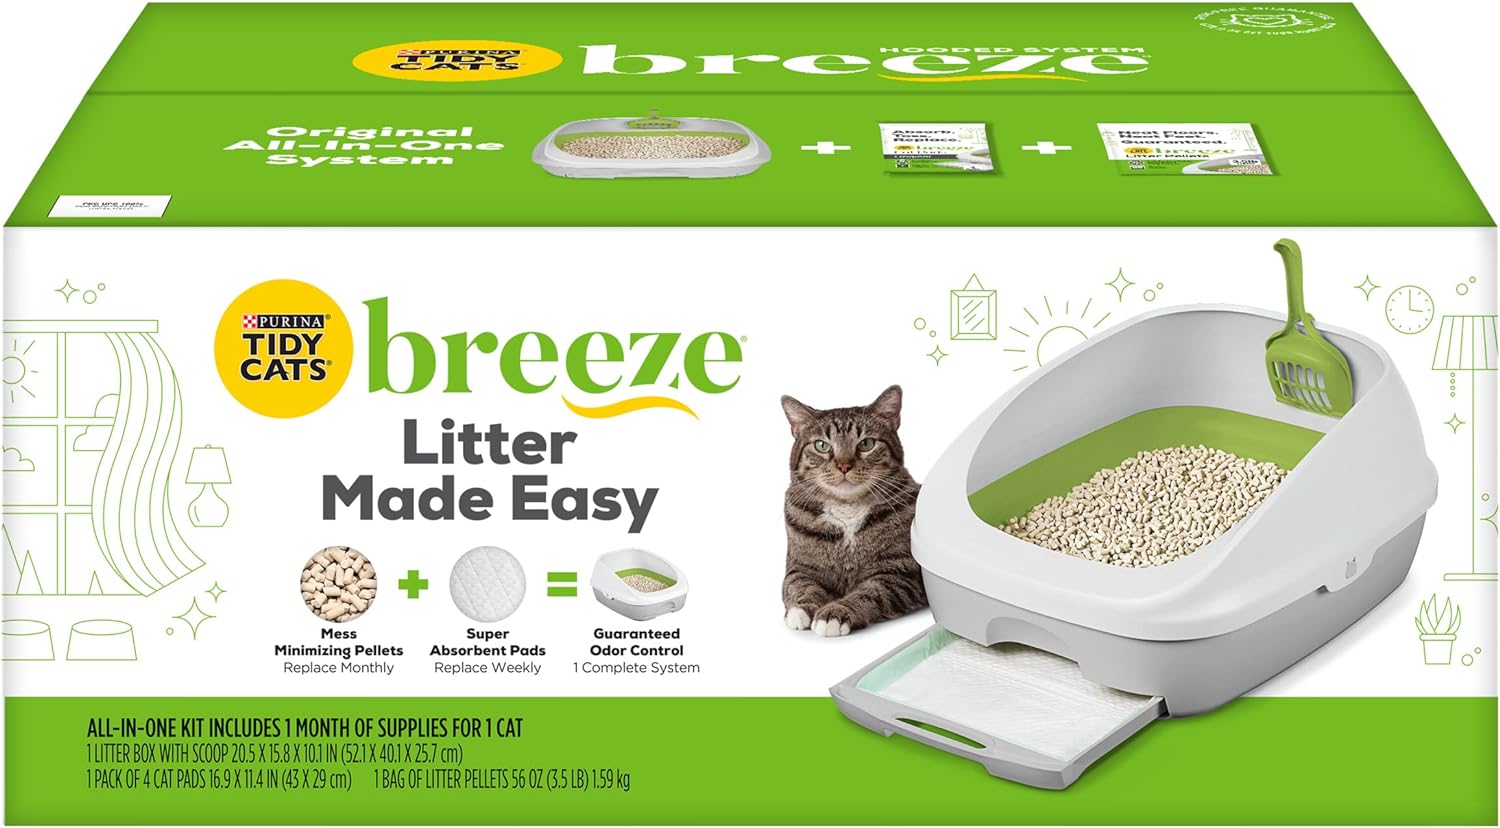 Purina Tidy Cats Breeze Litter System